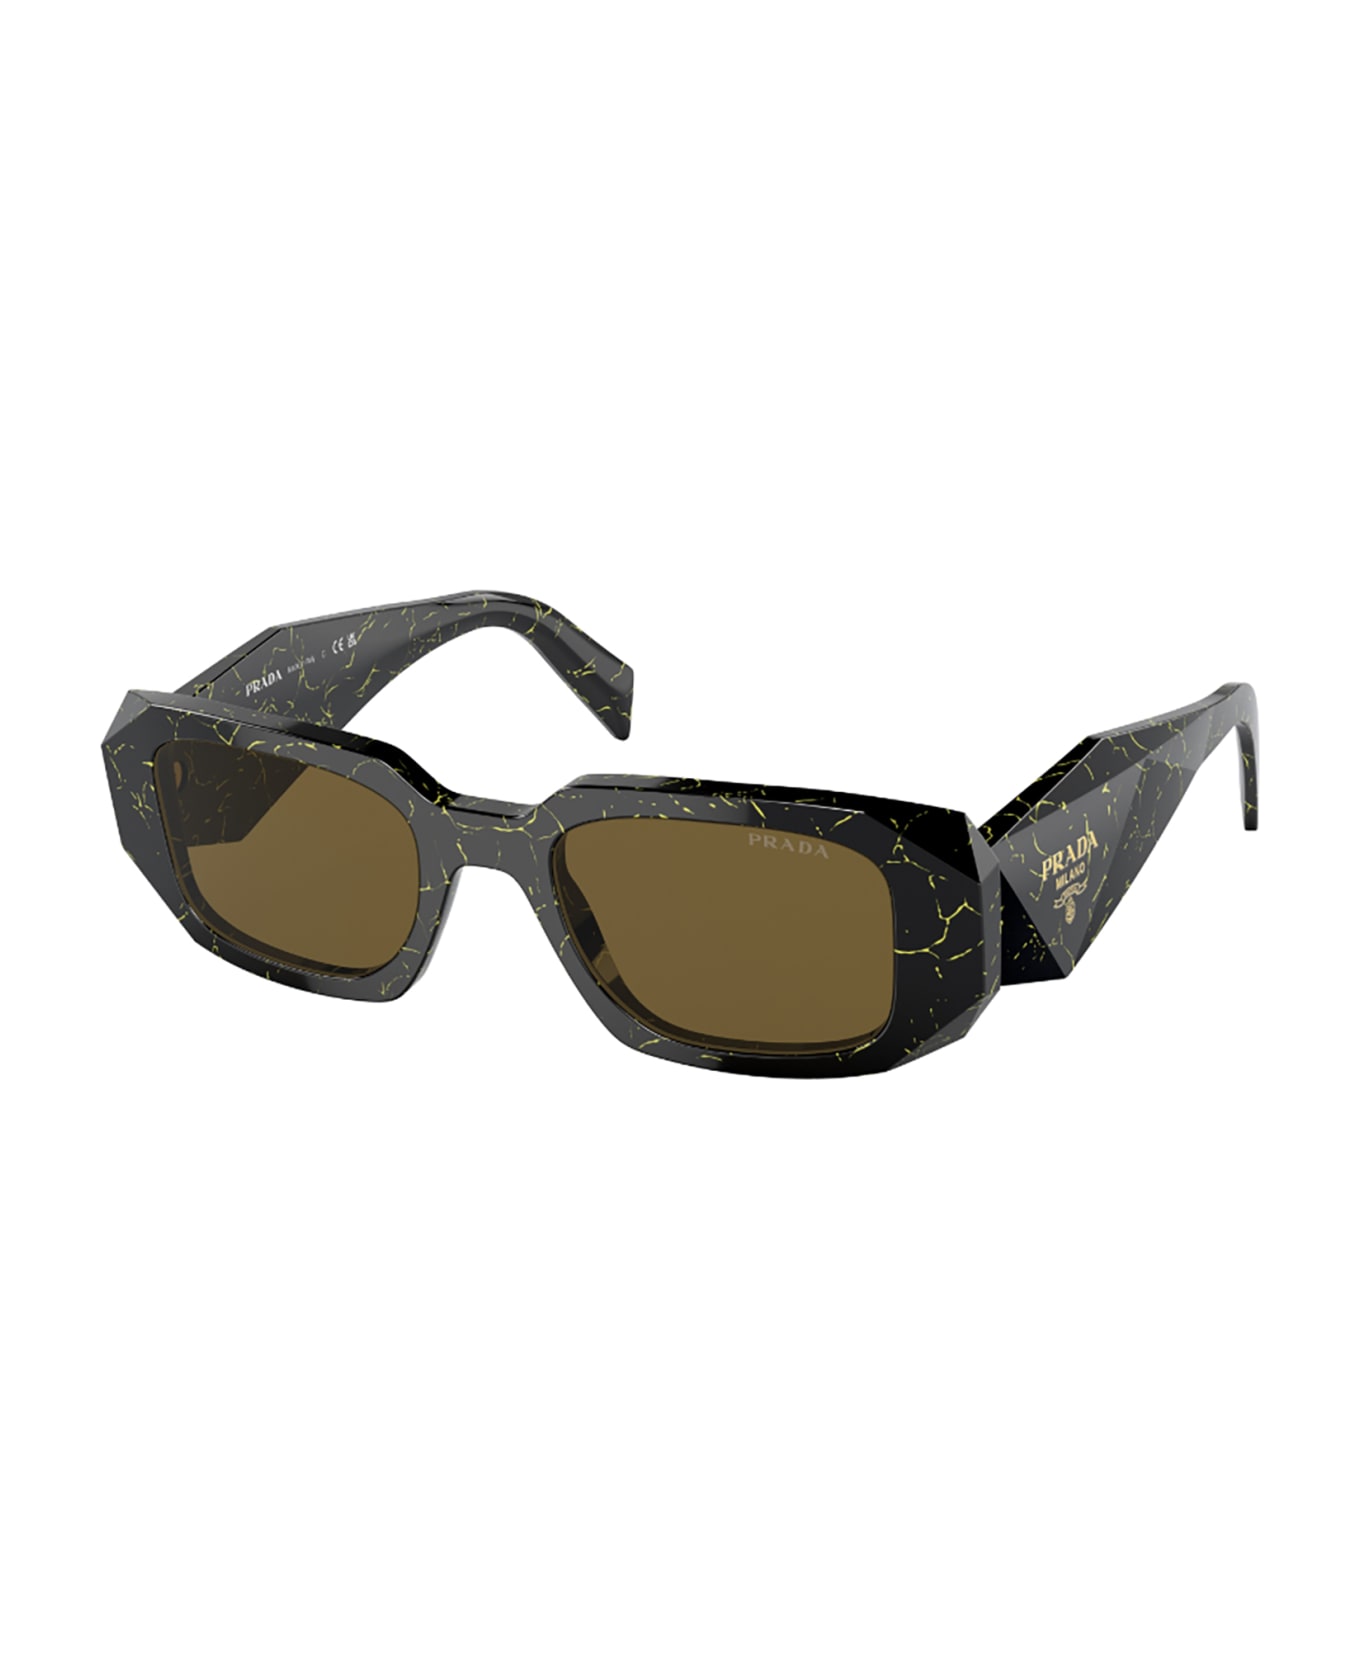 Prada Eyewear 17WS SOLE Sunglasses - T サングラス